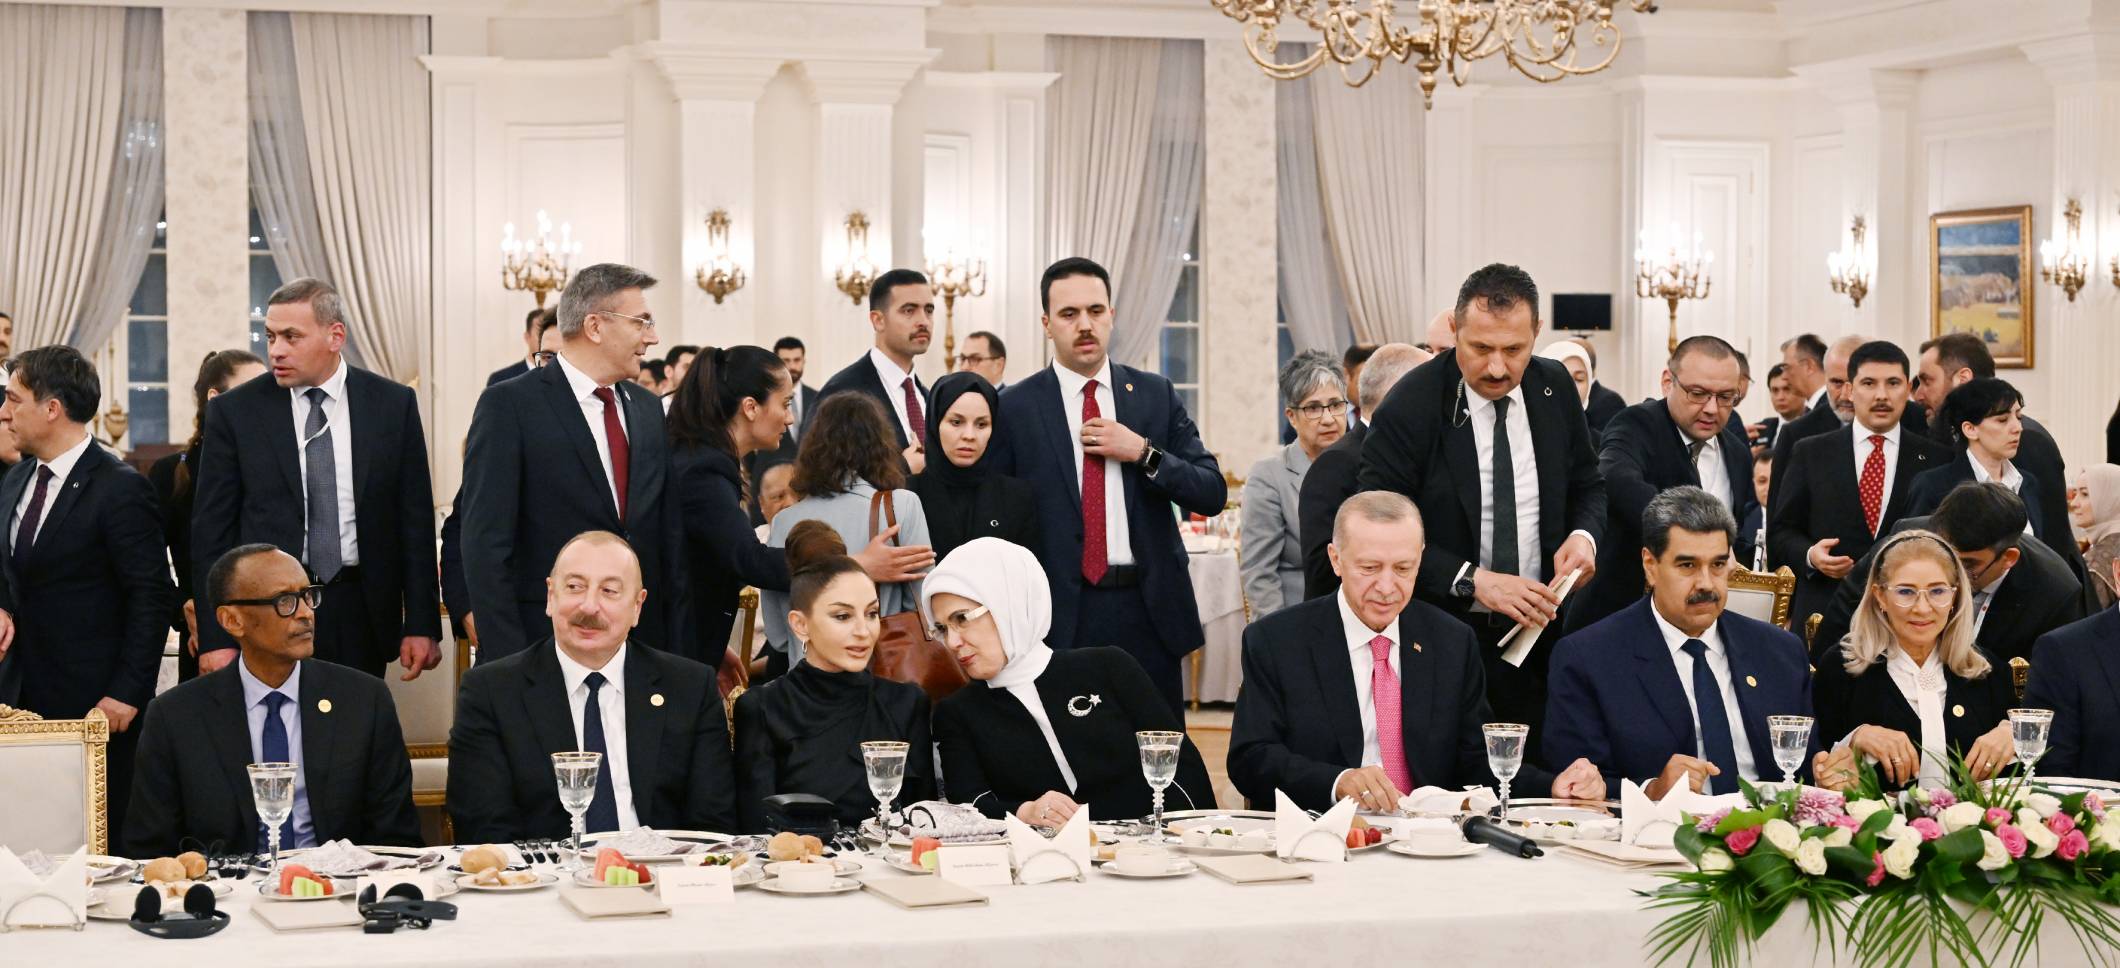 Ilham Aliyev, First Lady Mehriban Aliyeva attend dinner hosted on behalf of Recep Tayyip Erdogan in Ankara